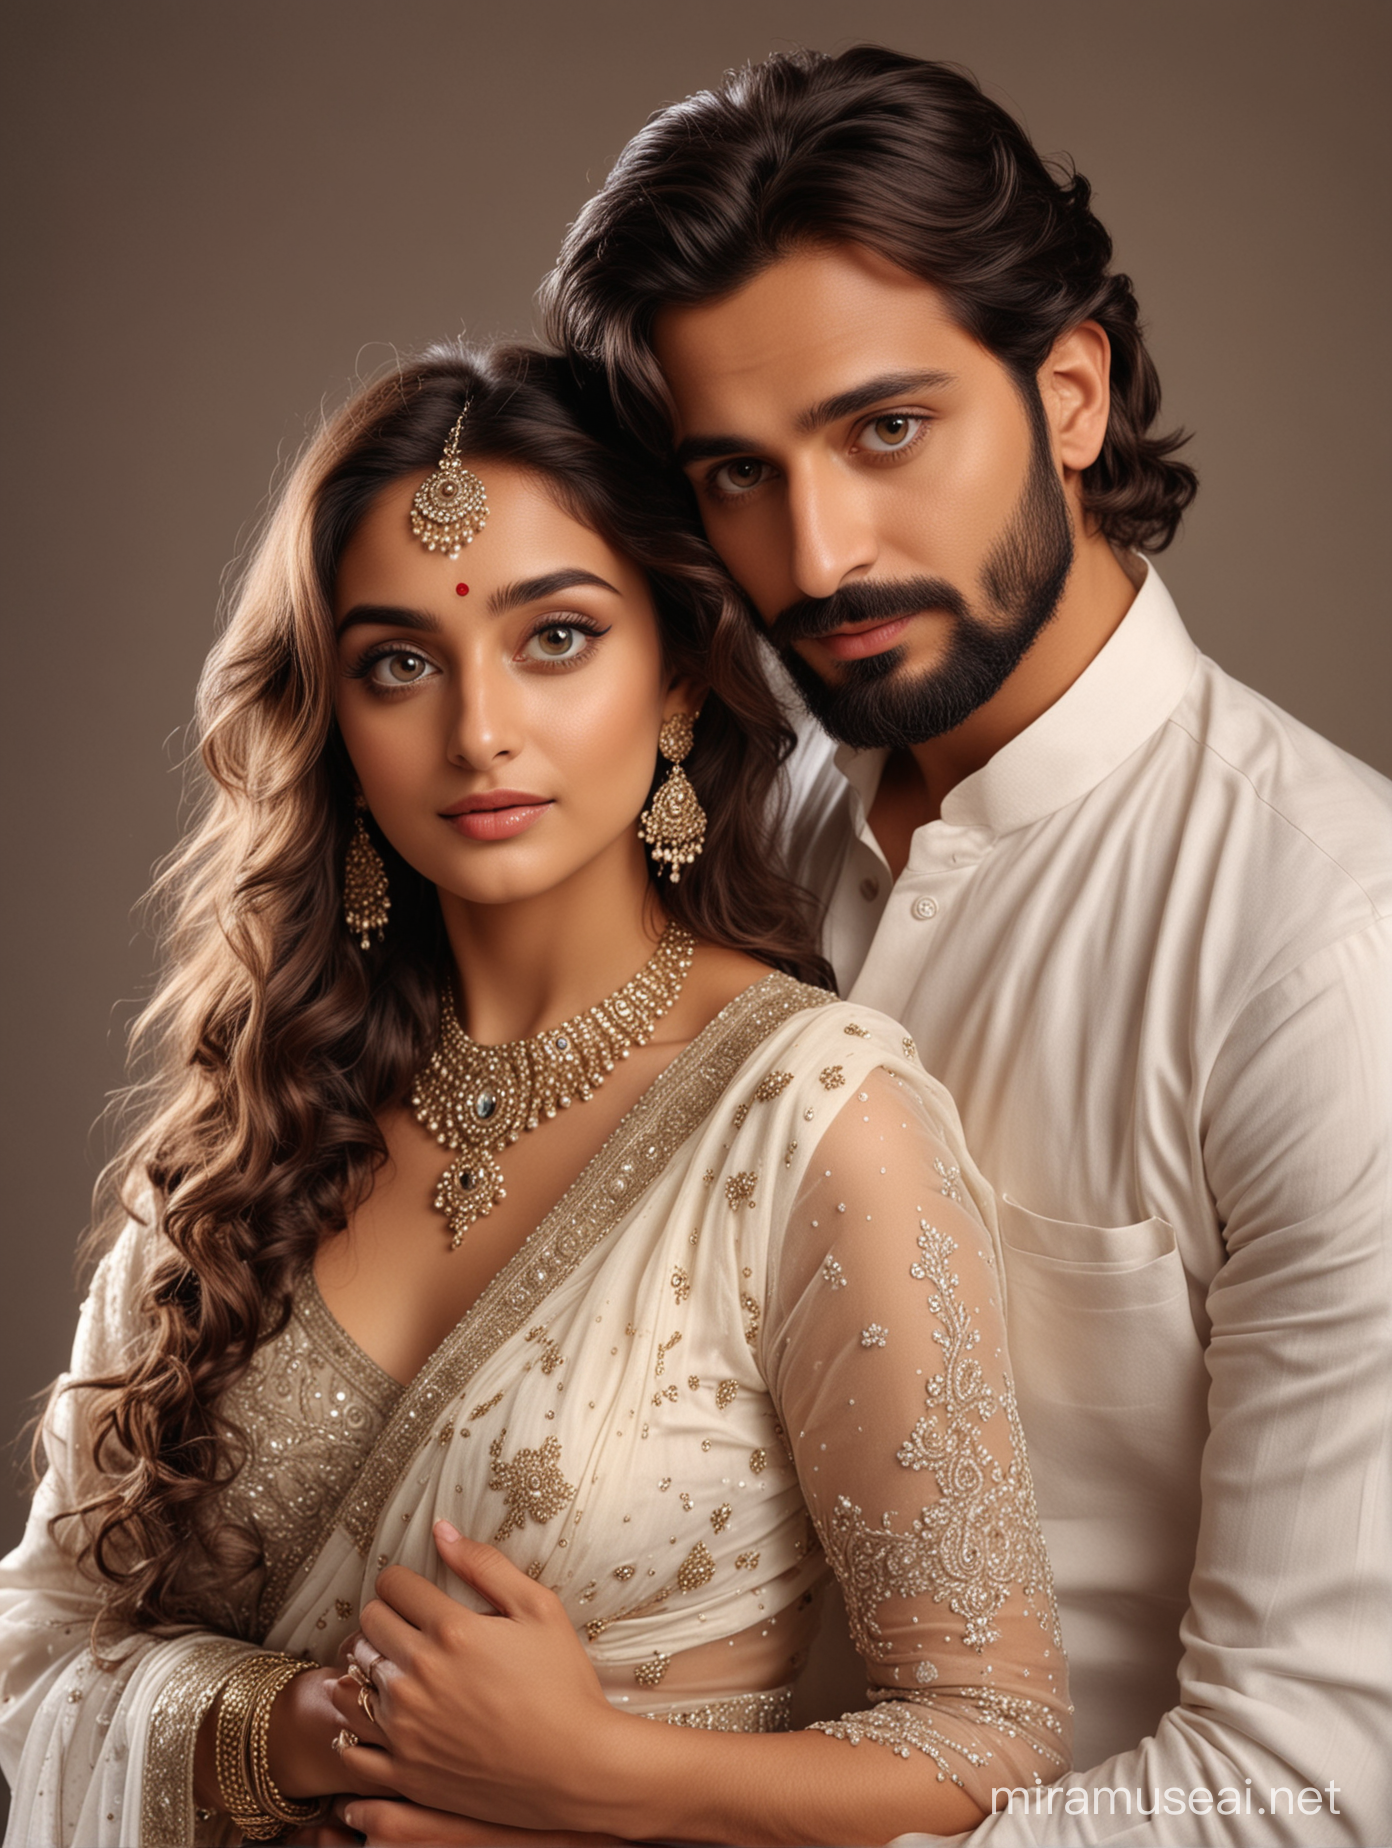 Elegant Indian Couple Embracing in Formal Attire Romantic Fusion Portrait